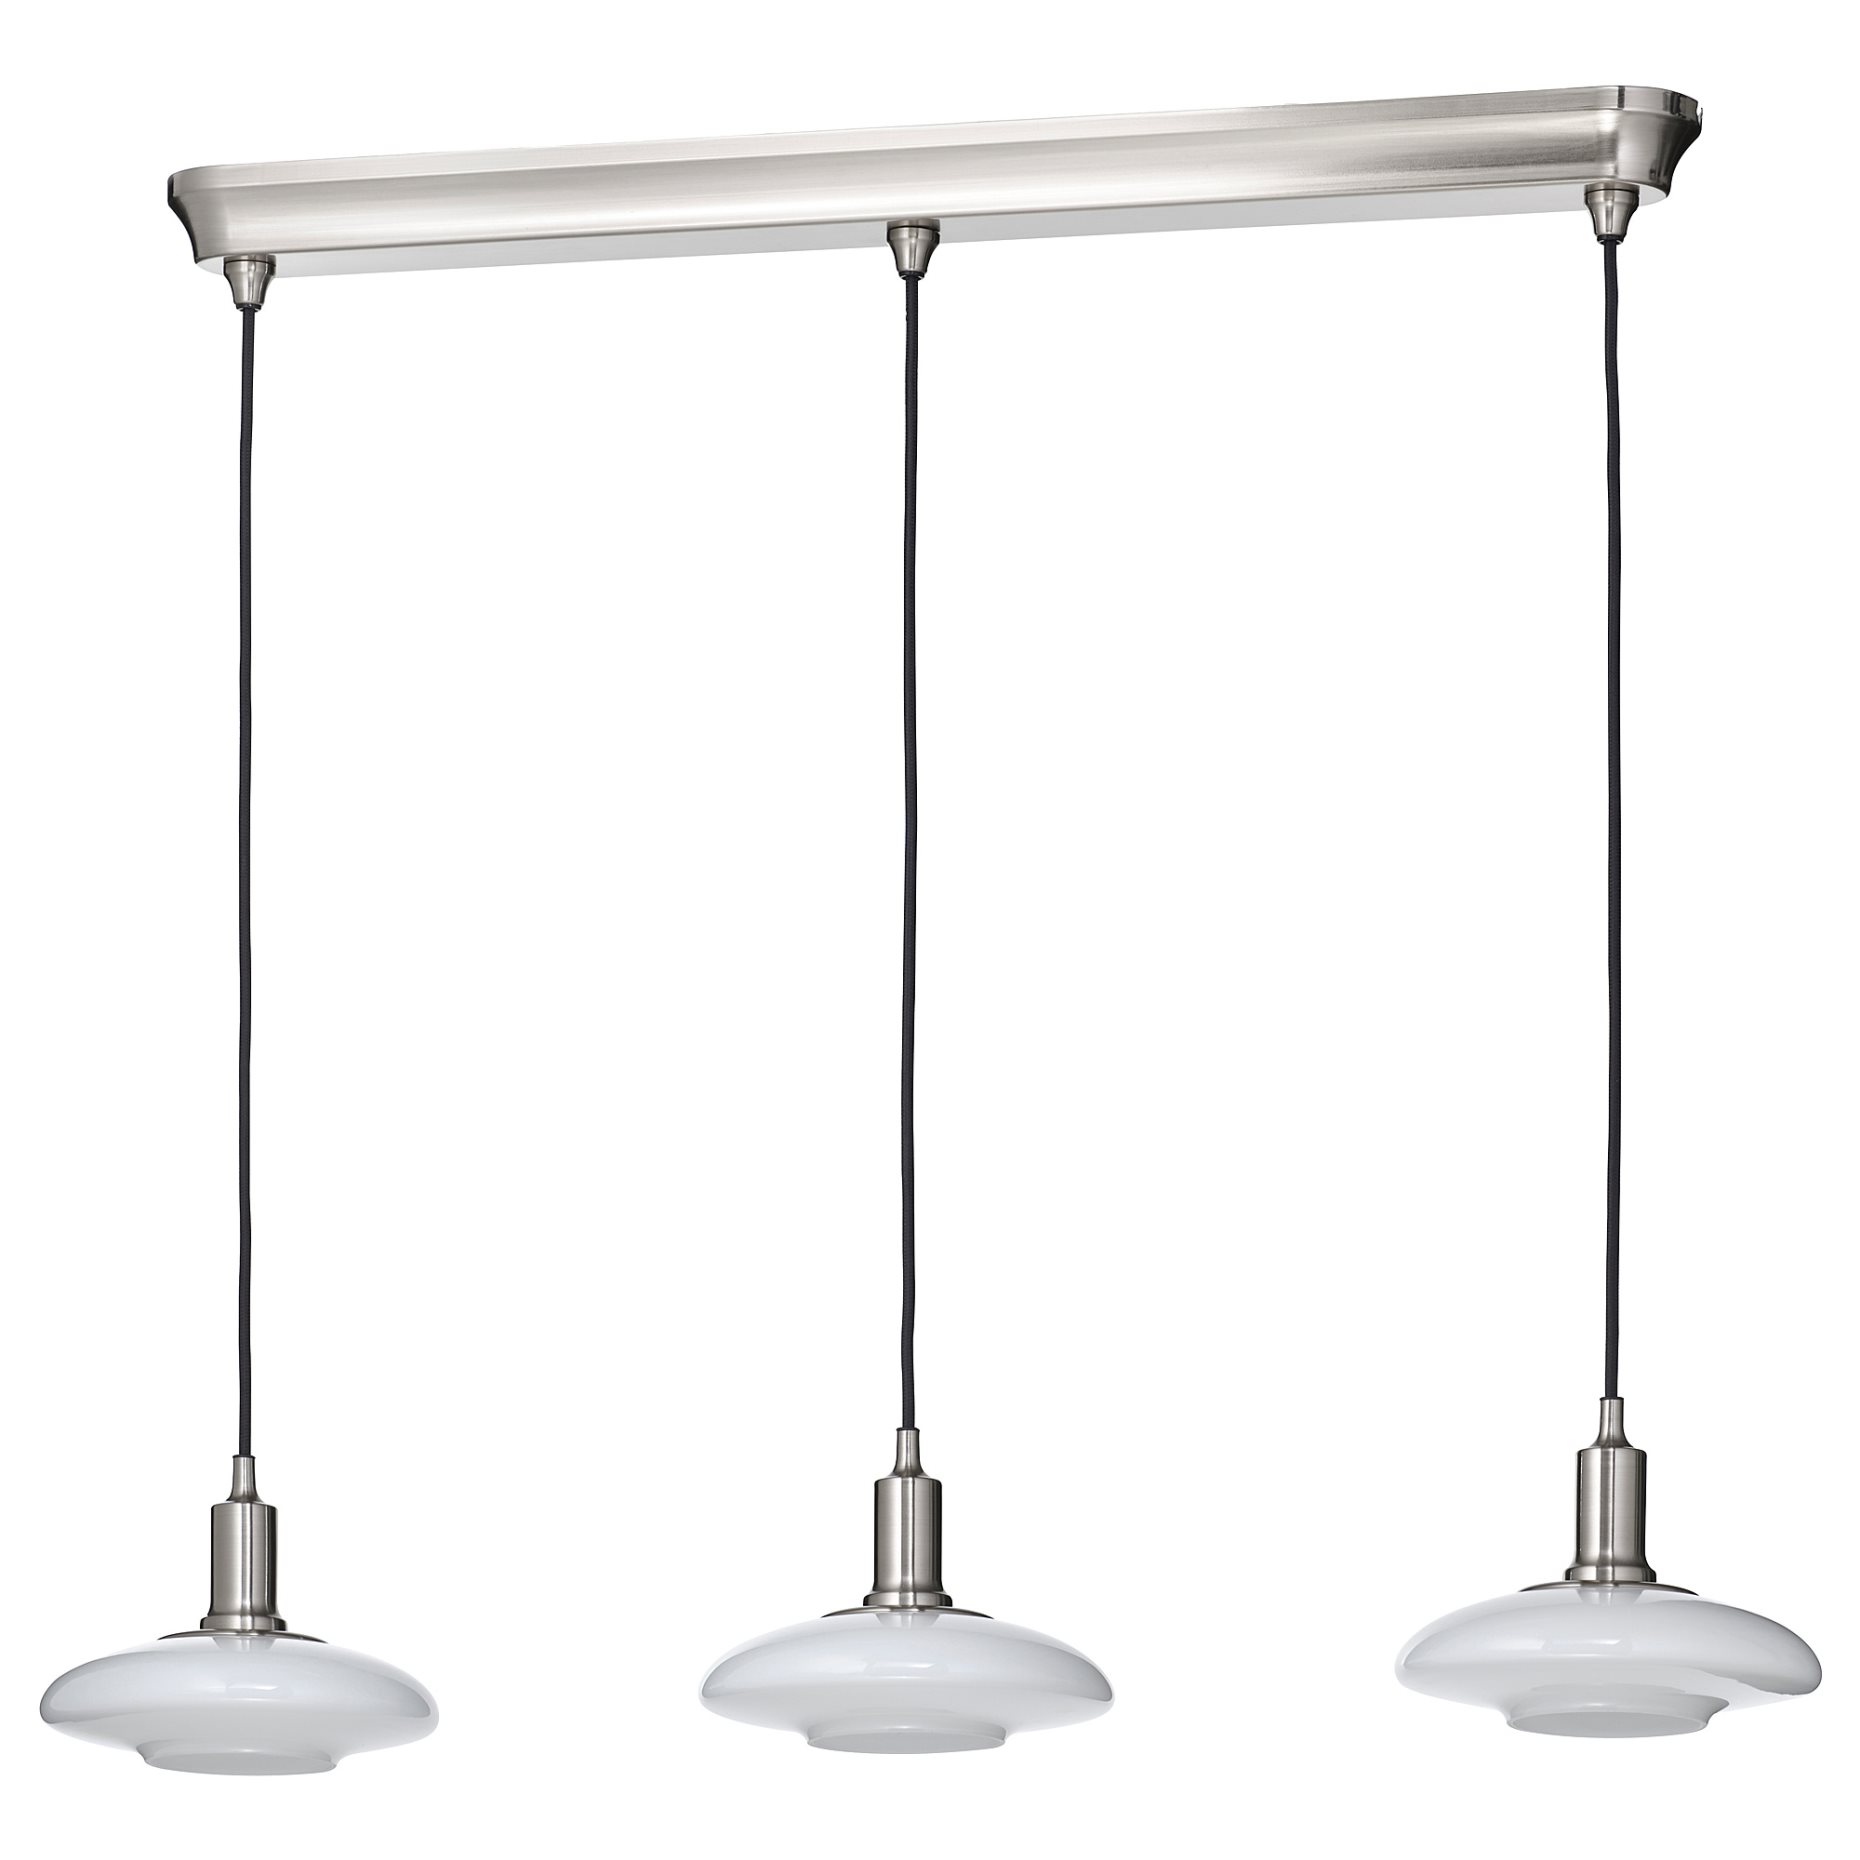 TÄLLBYN, pendant lamp with 3 lamps, 89 cm, 504.898.42